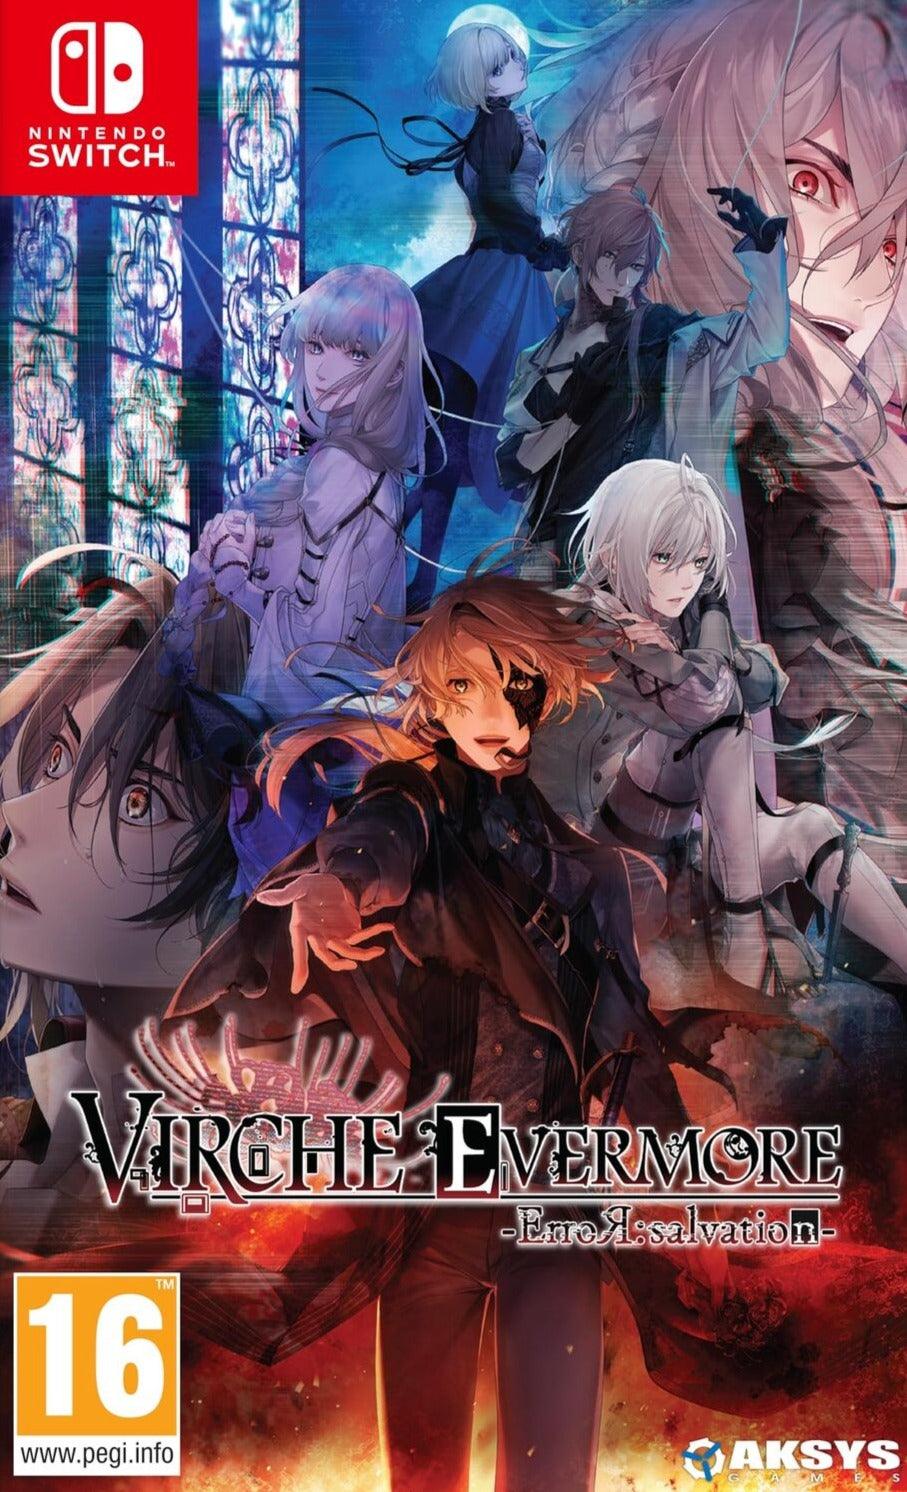 Virche Evermore -Error: Salvation- - Nintendo Switch - GD Games 